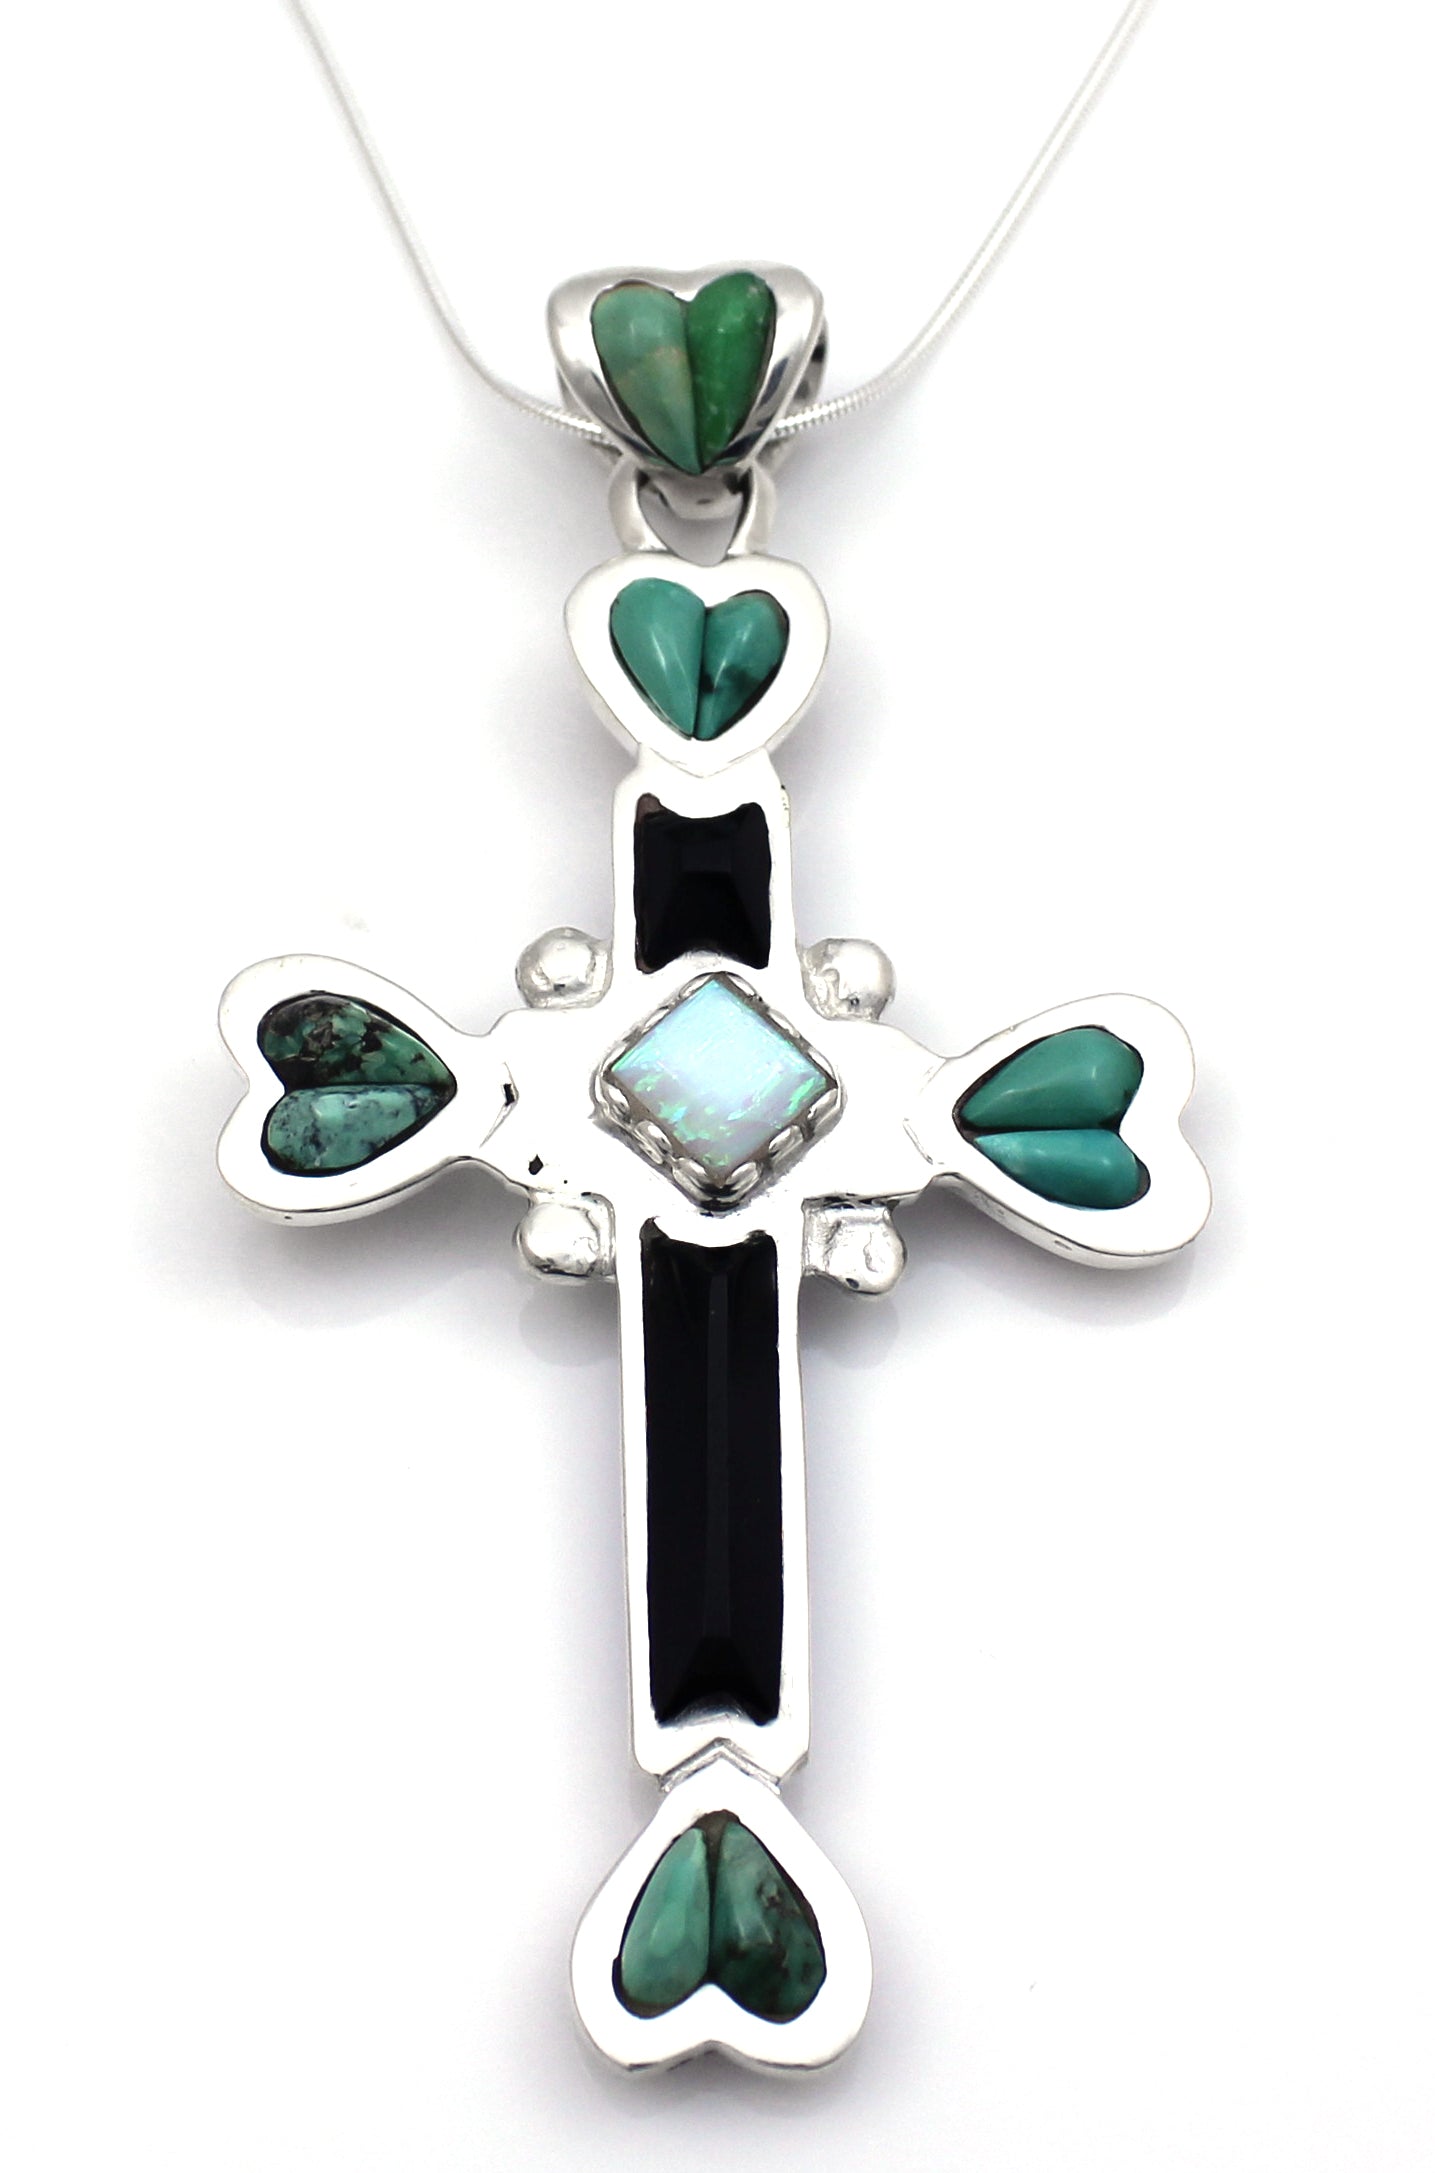 6 Of Hearts Cross Pendant-jewelry-Ben Nighthorse-Sorrel Sky Gallery